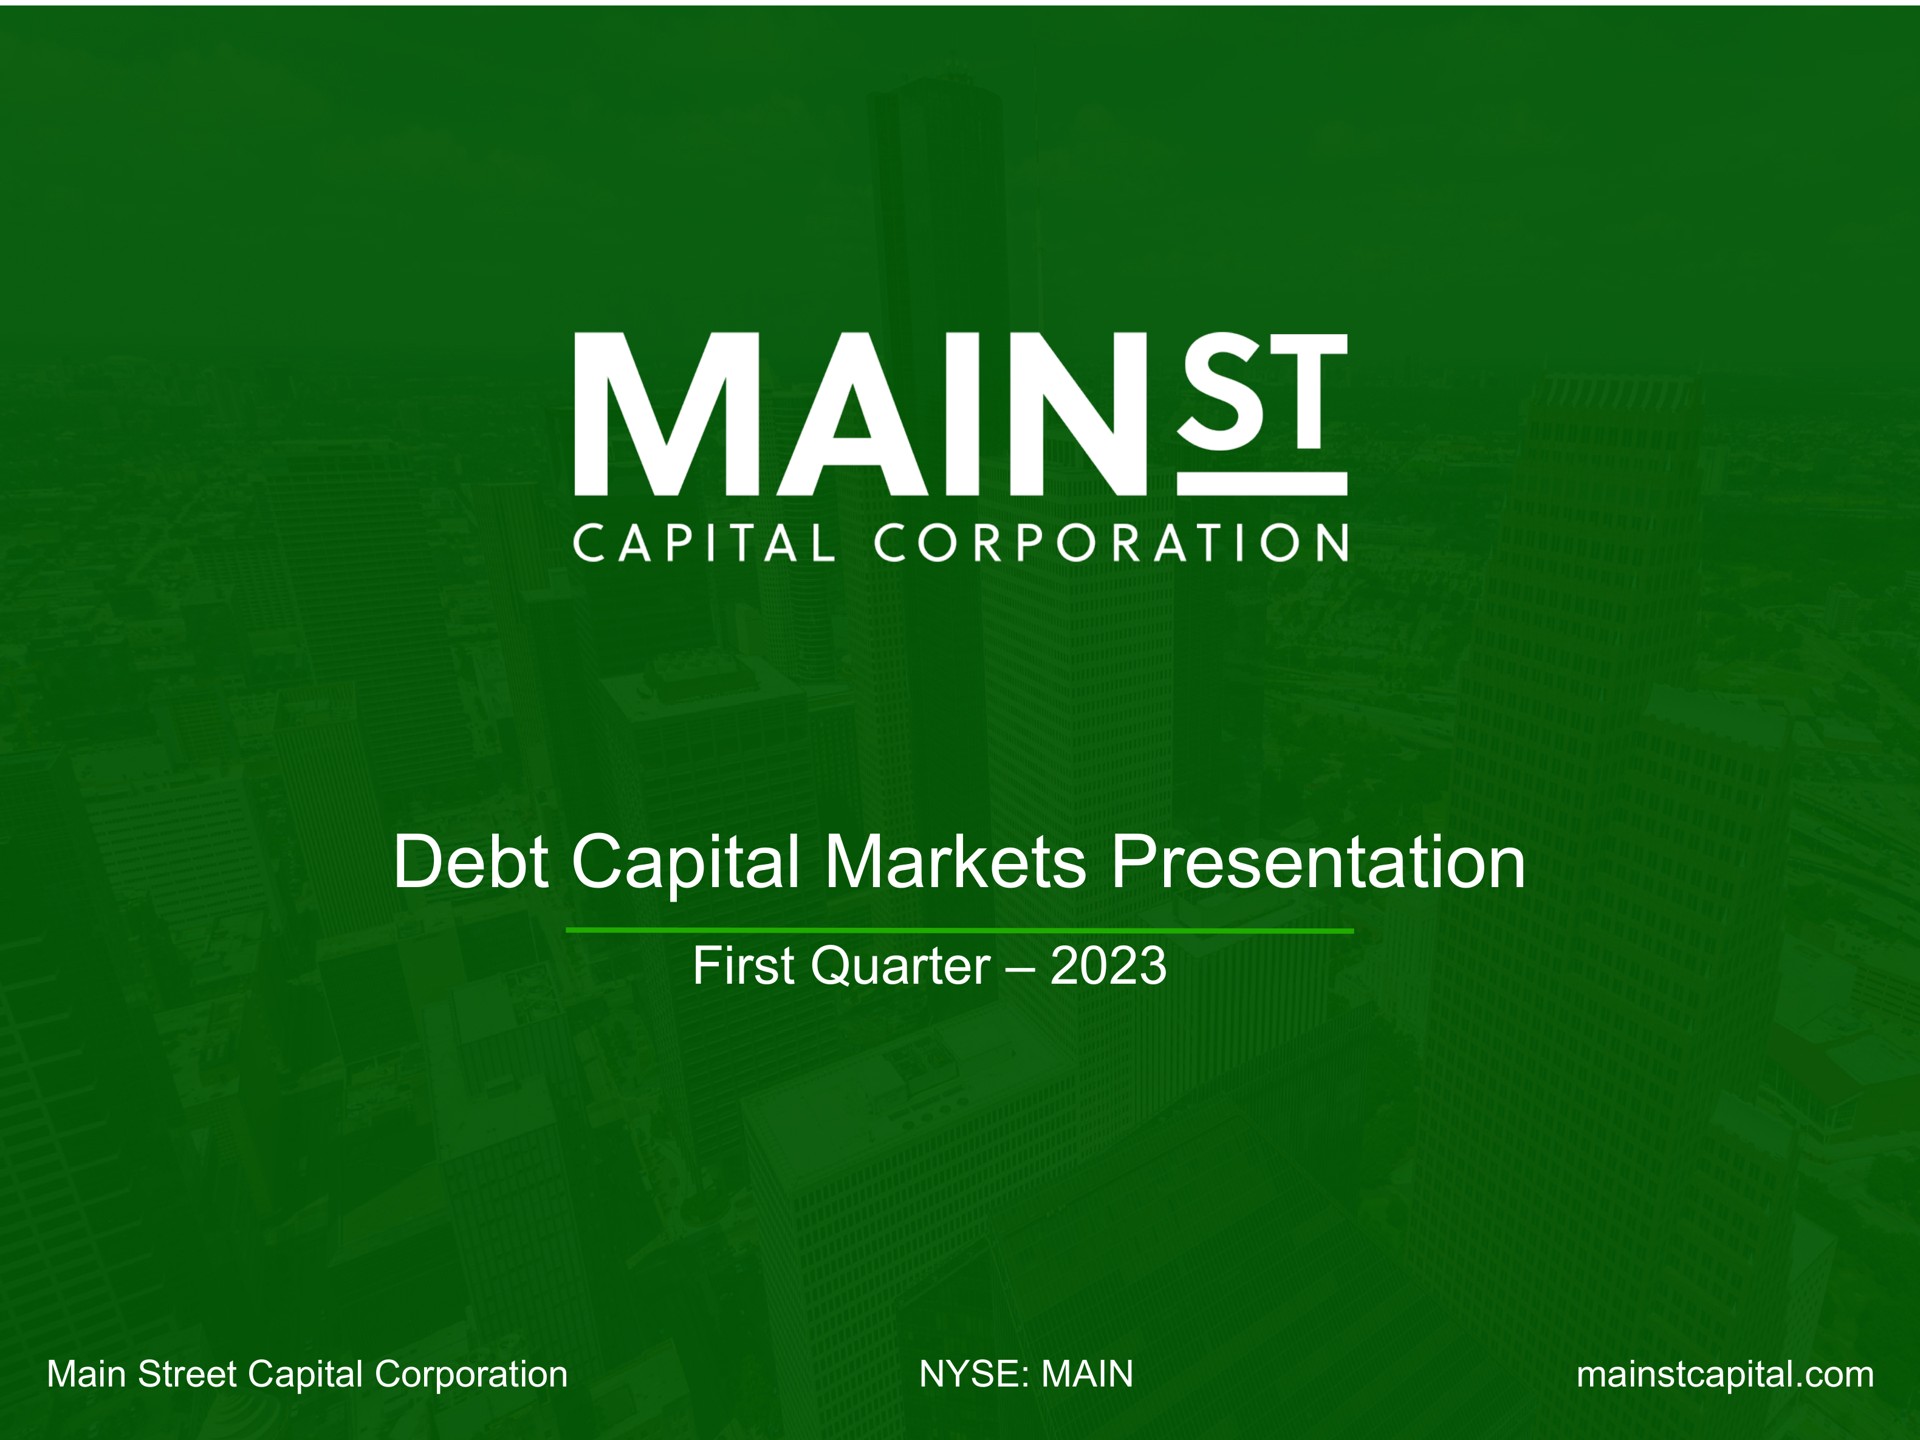 debt capital markets presentation first quarter main street capital corporation main mains | Main Street Capital